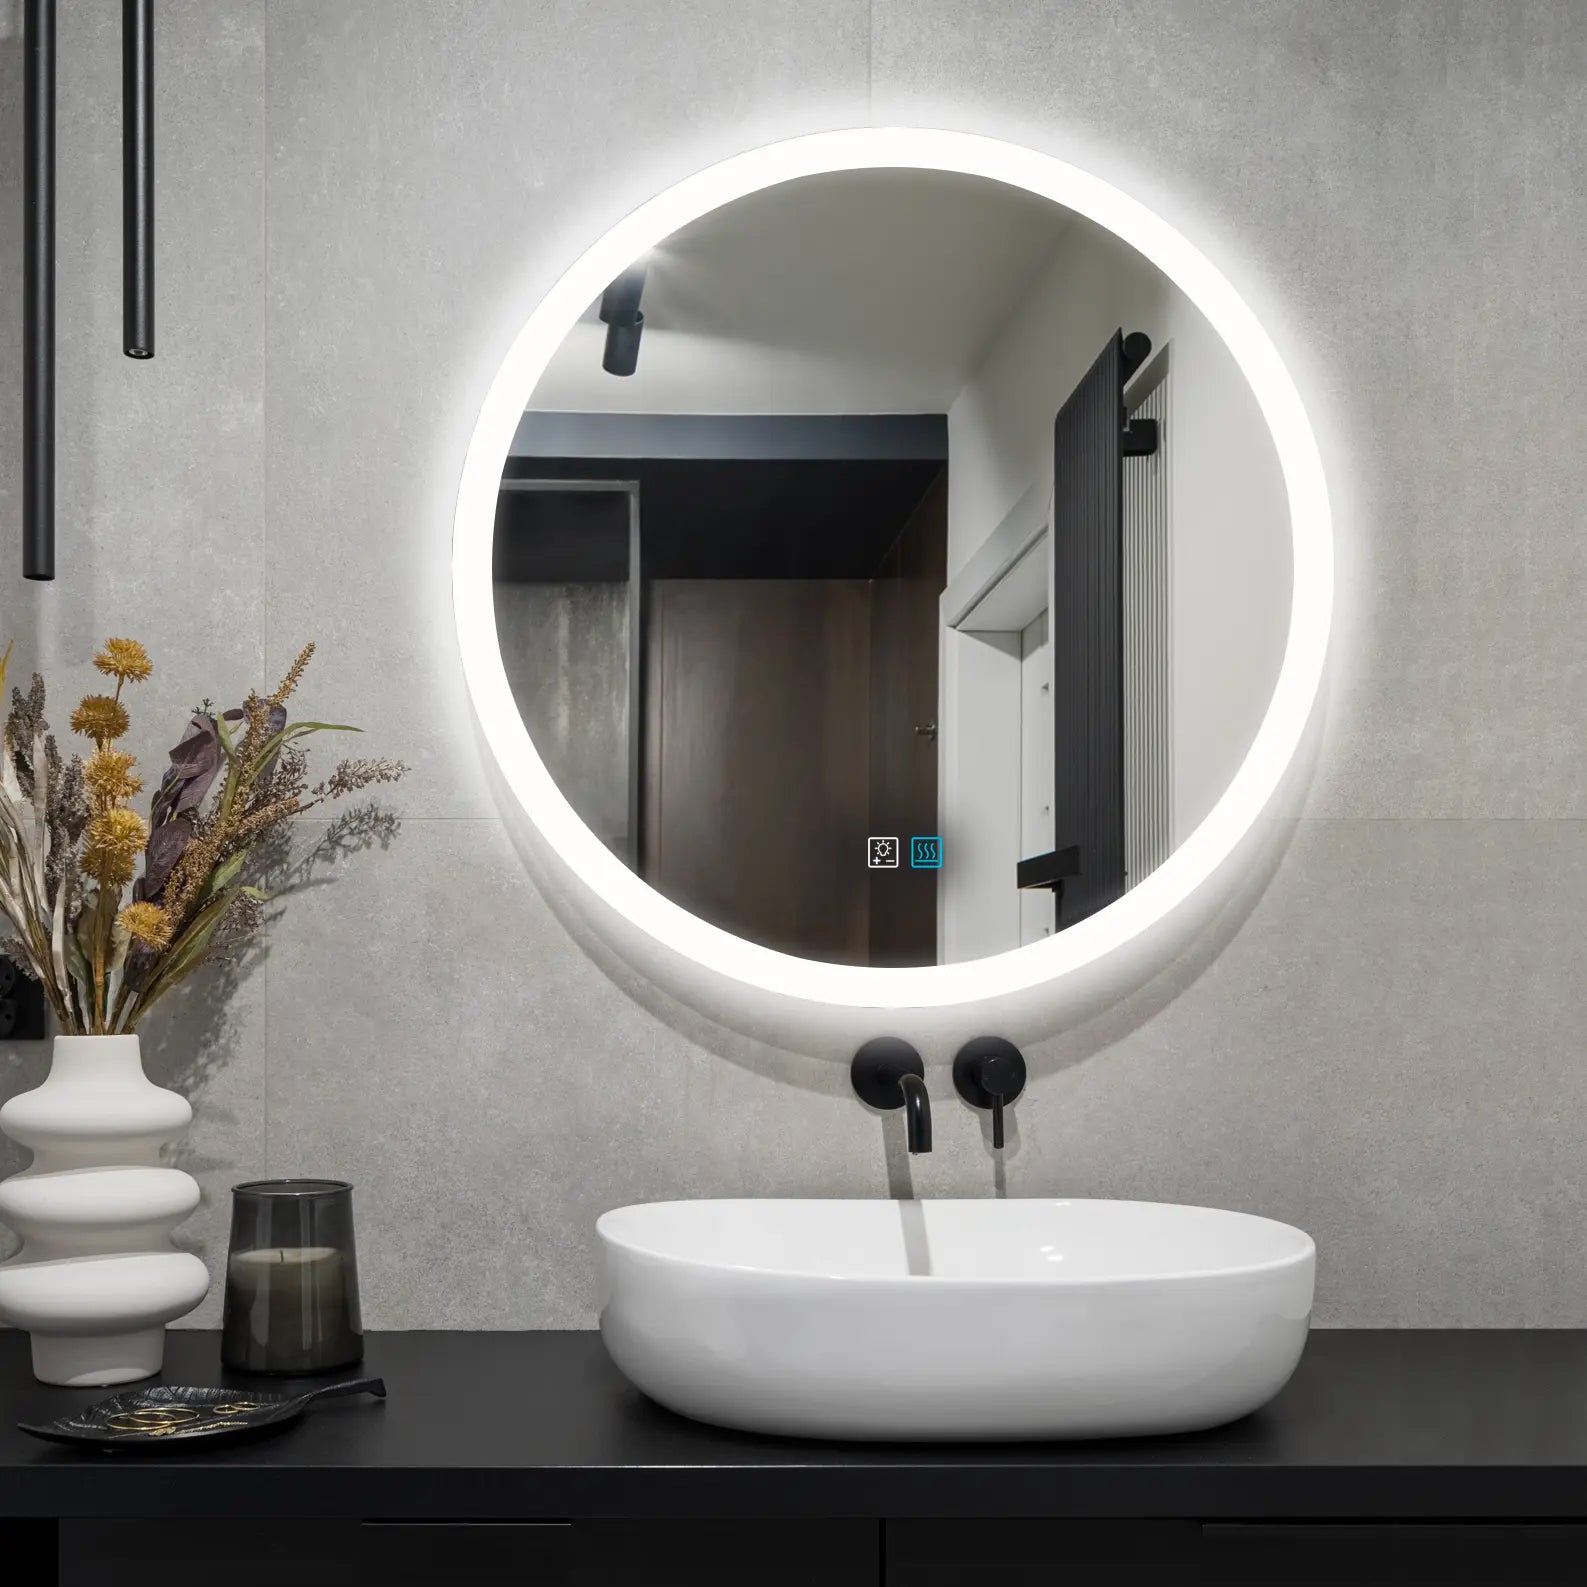 Vanity Oval Wall Mirrors Custom-Cut Mirror Frameless Mirror Home